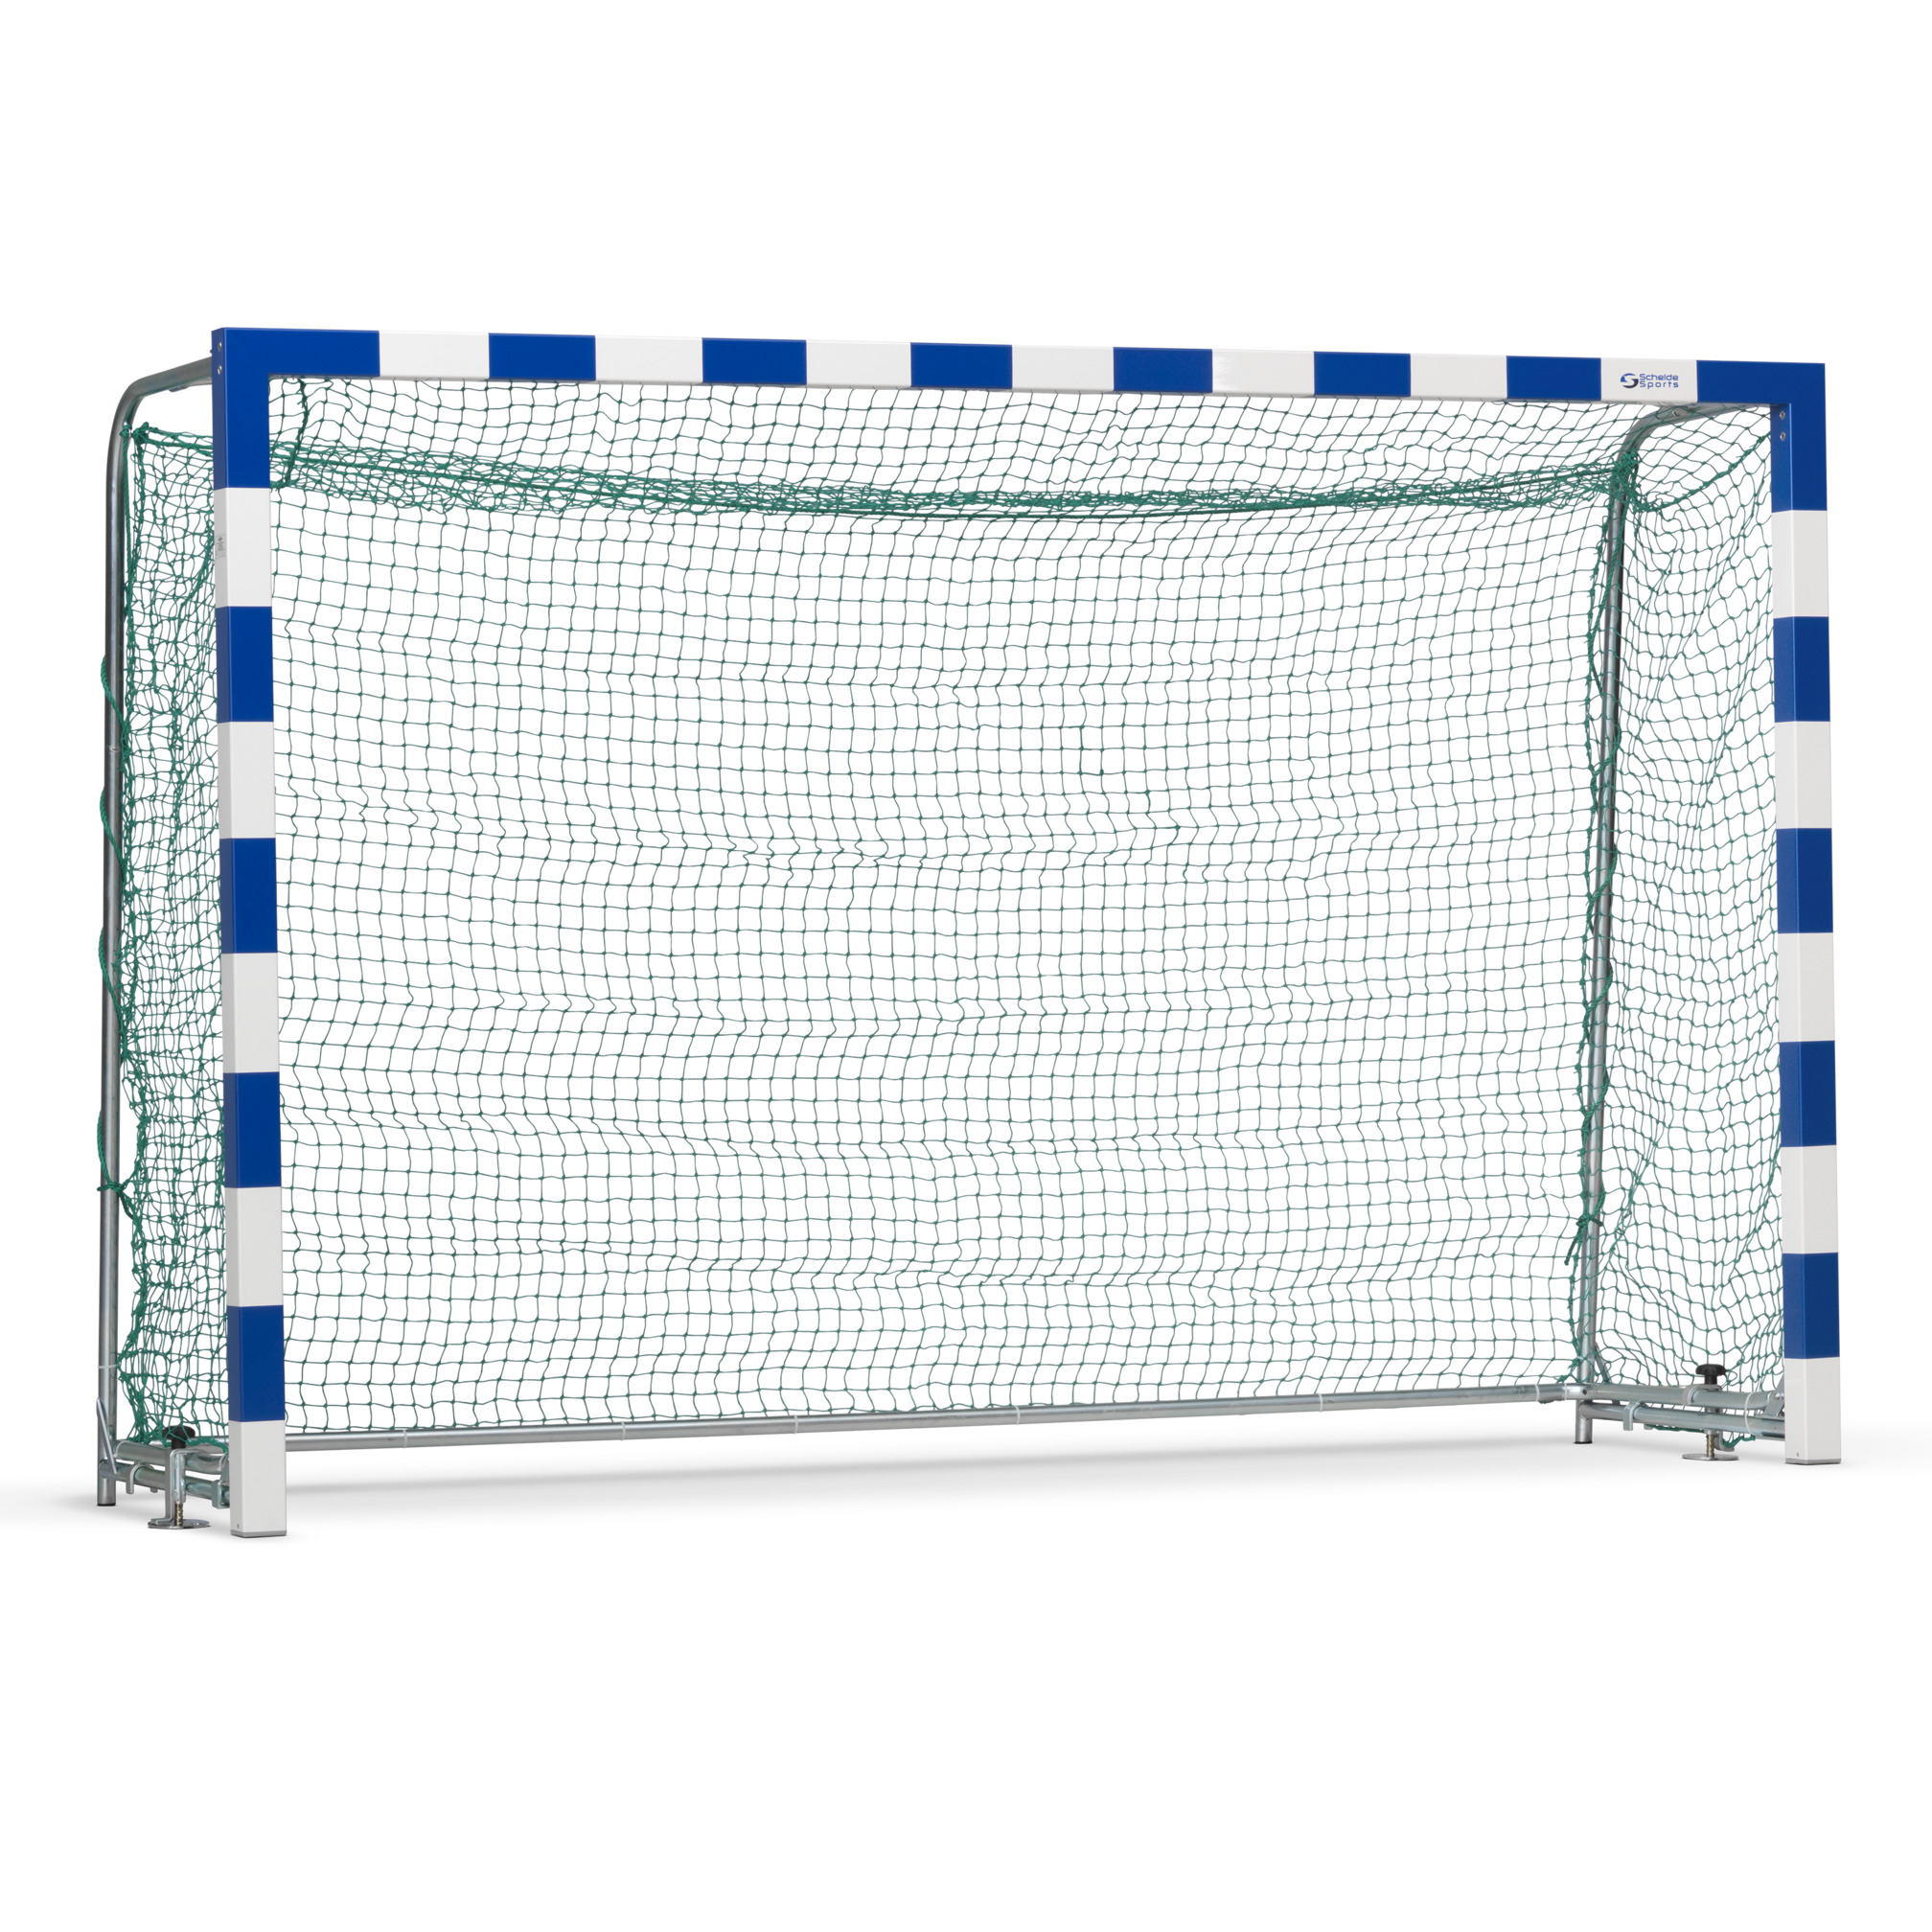 Goal net 3x2 m, meshes of 4.5x4.5 cm